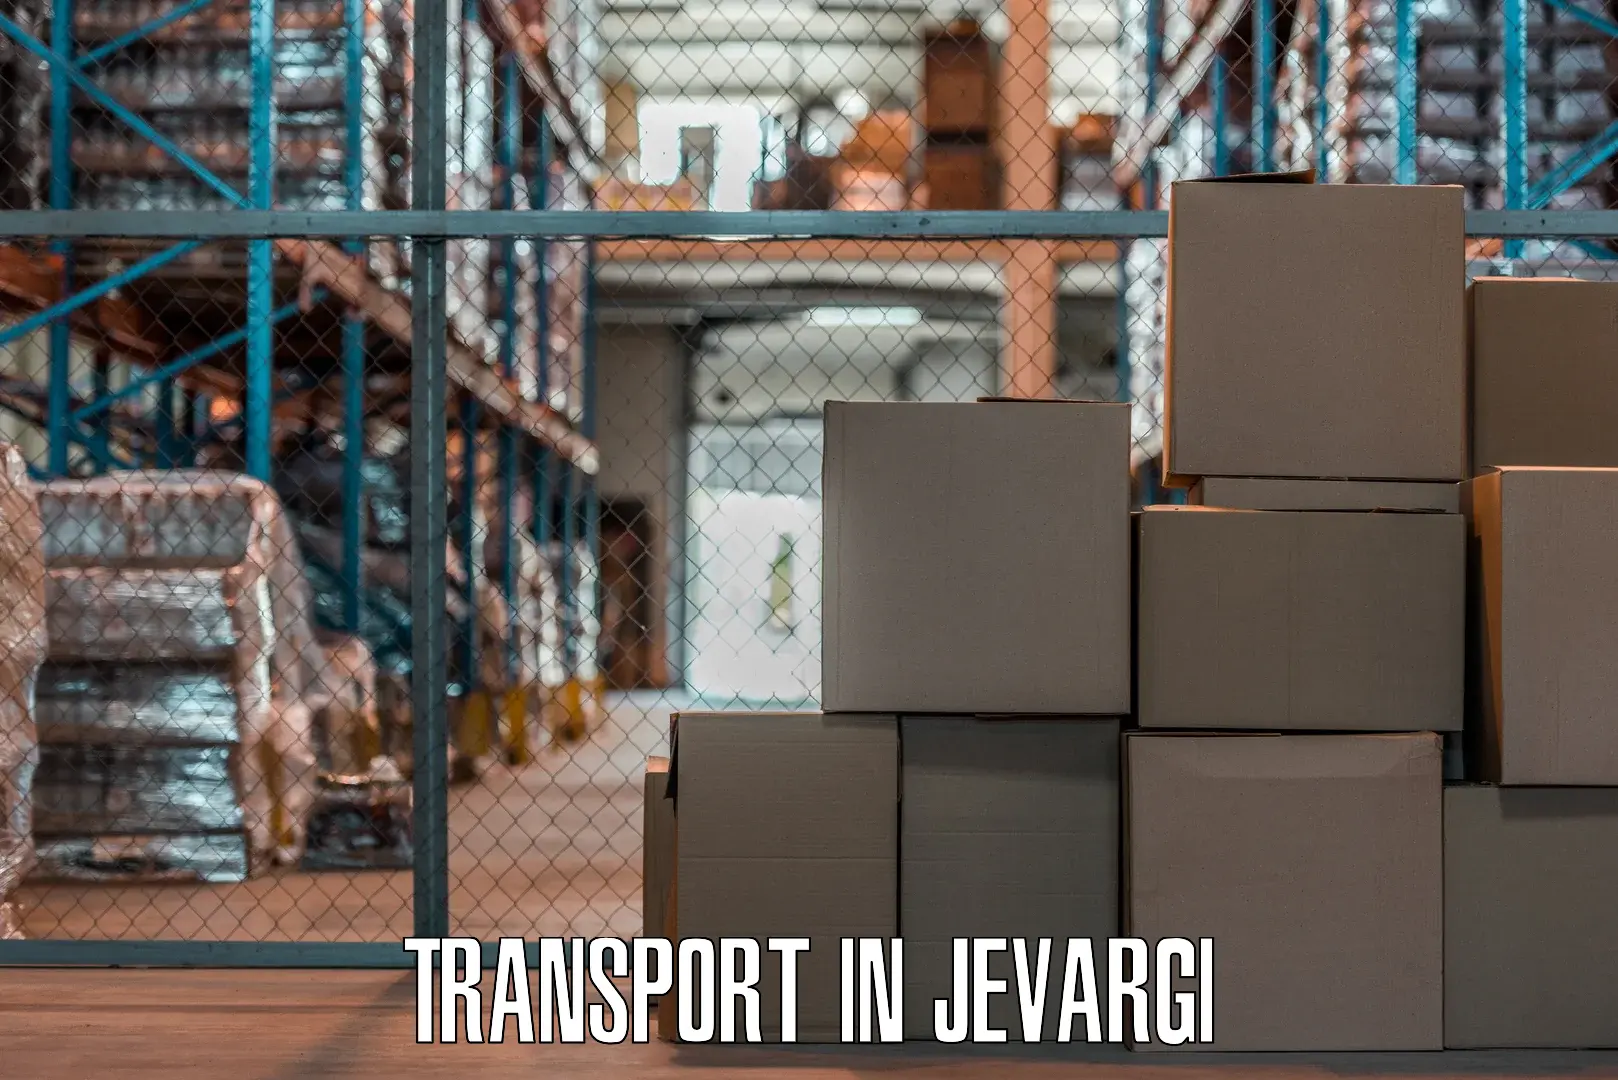 Container transportation services in Jevargi